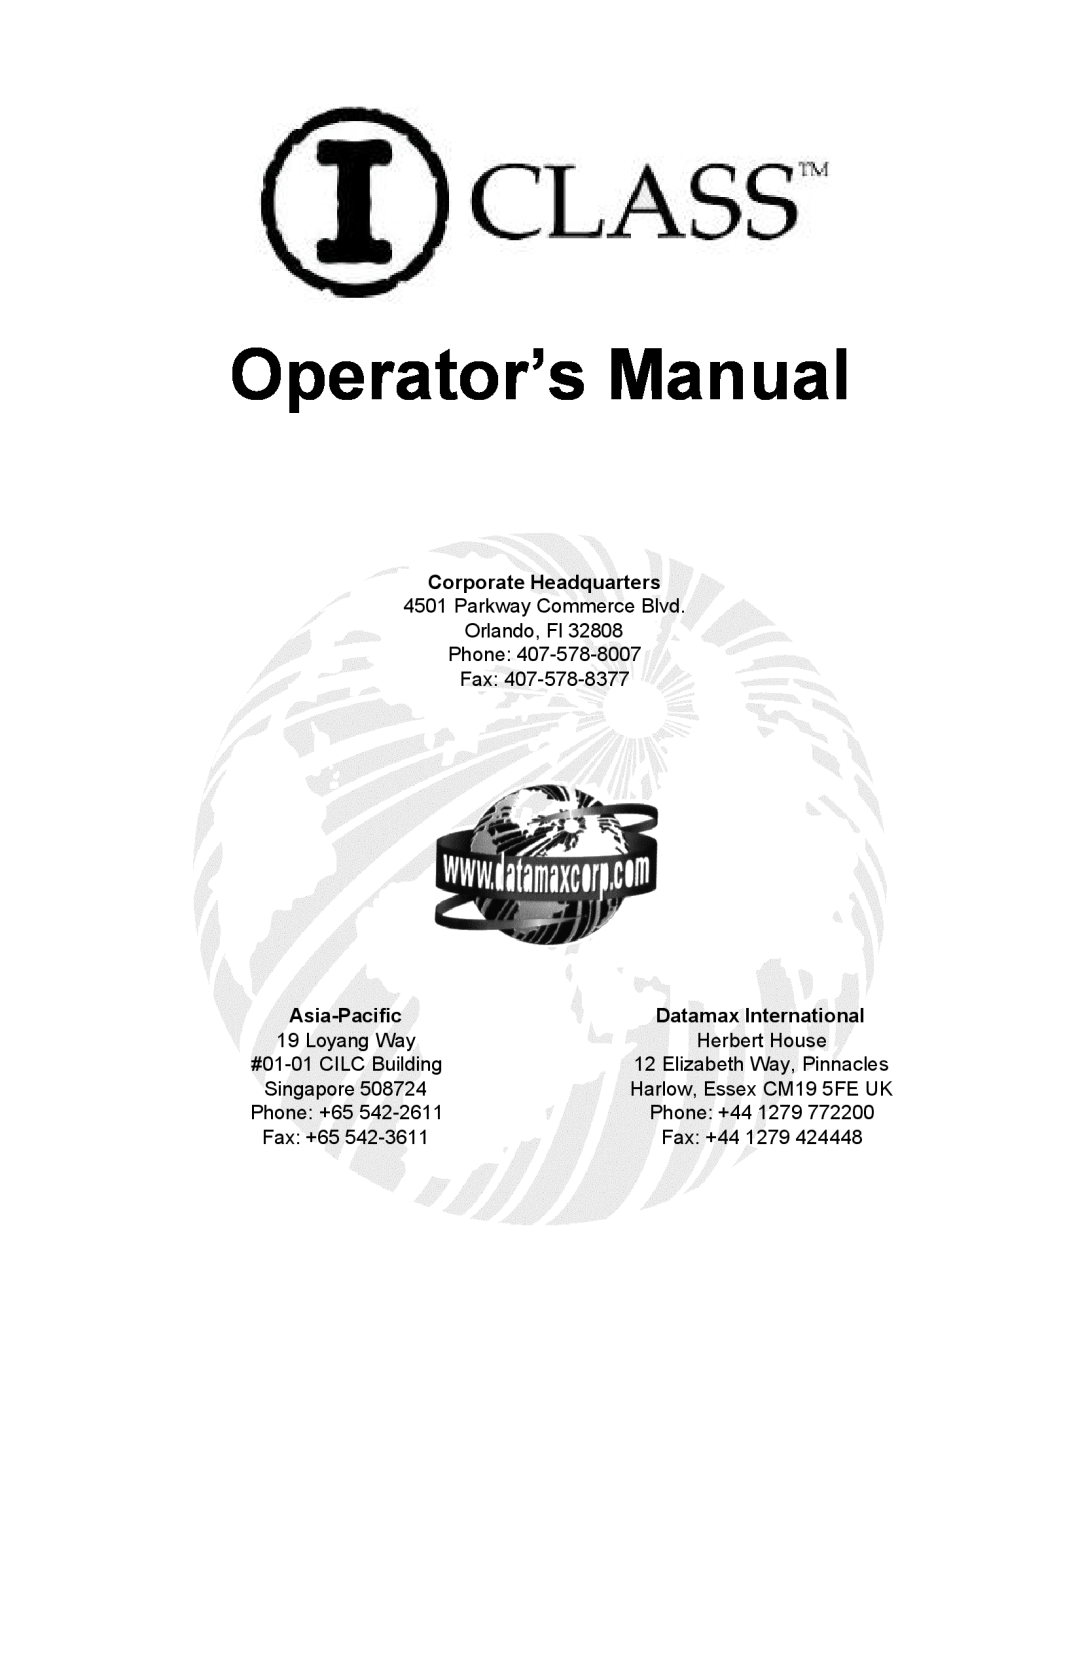 Xerox I Class manual Operator’s Manual, Corporate Headquarters, Parkway Commerce Blvd Orlando, Fl Phone, Fax, Asia-Pacific 